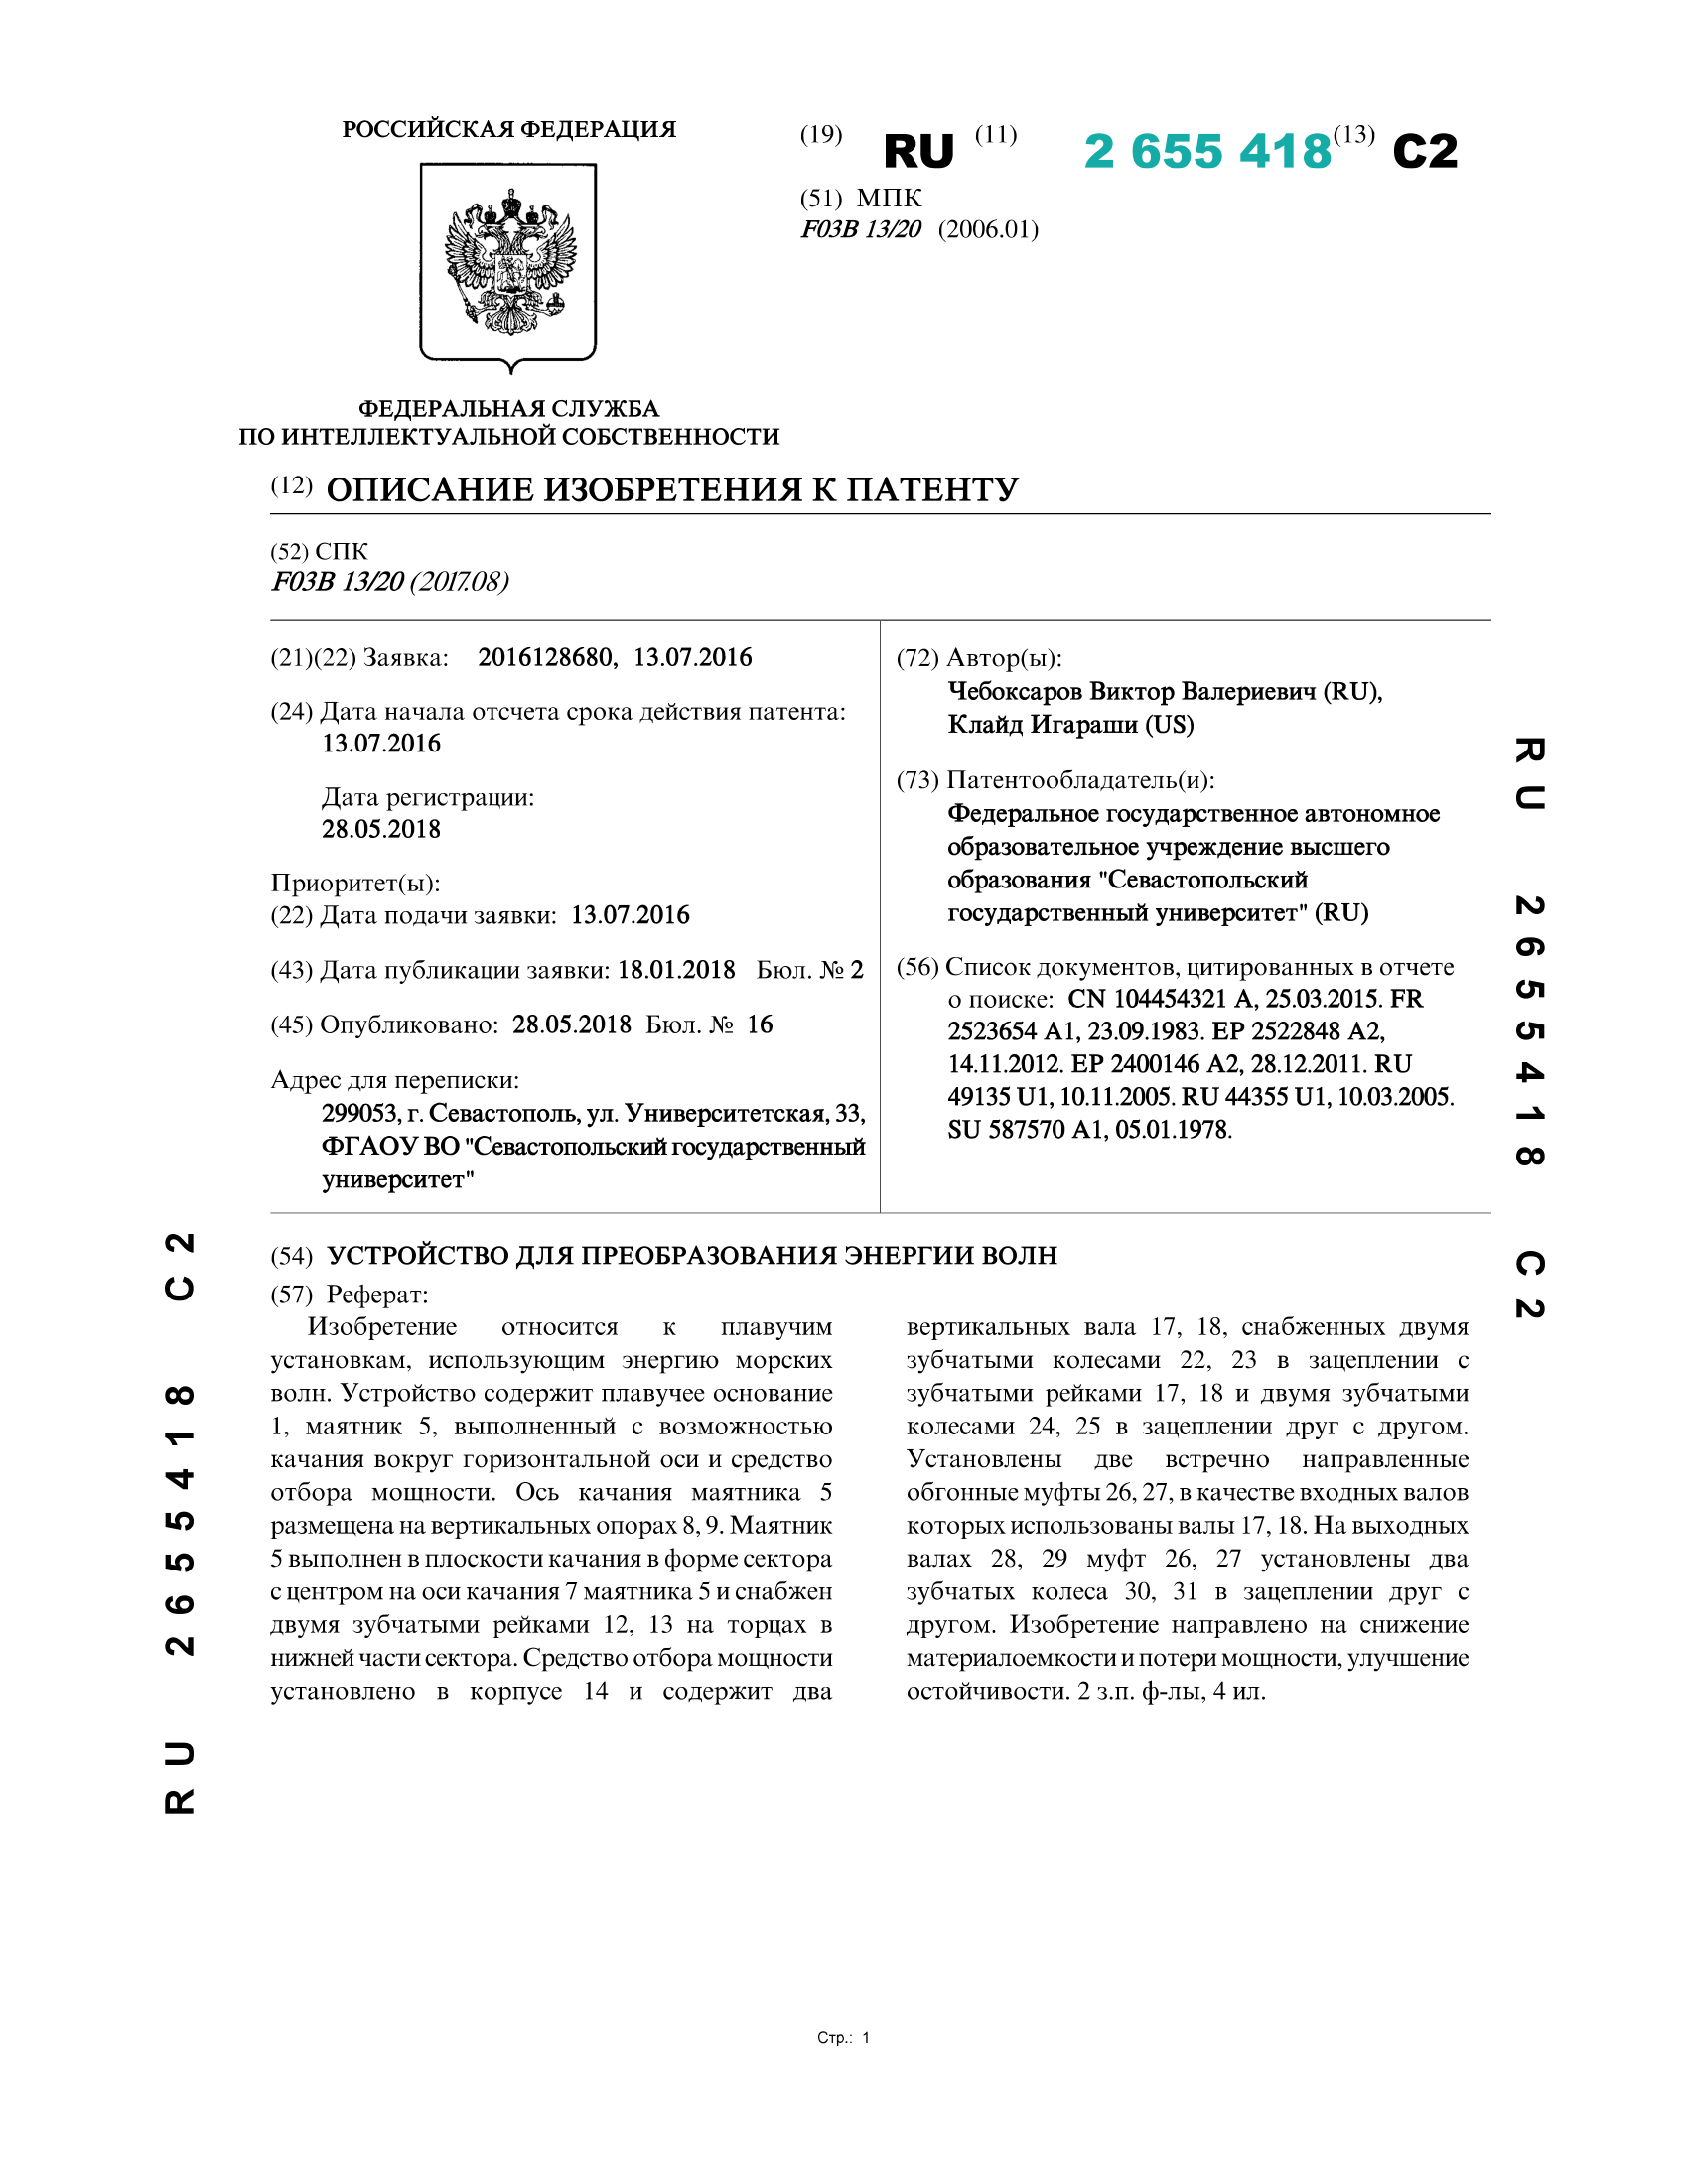 Russian patent 1